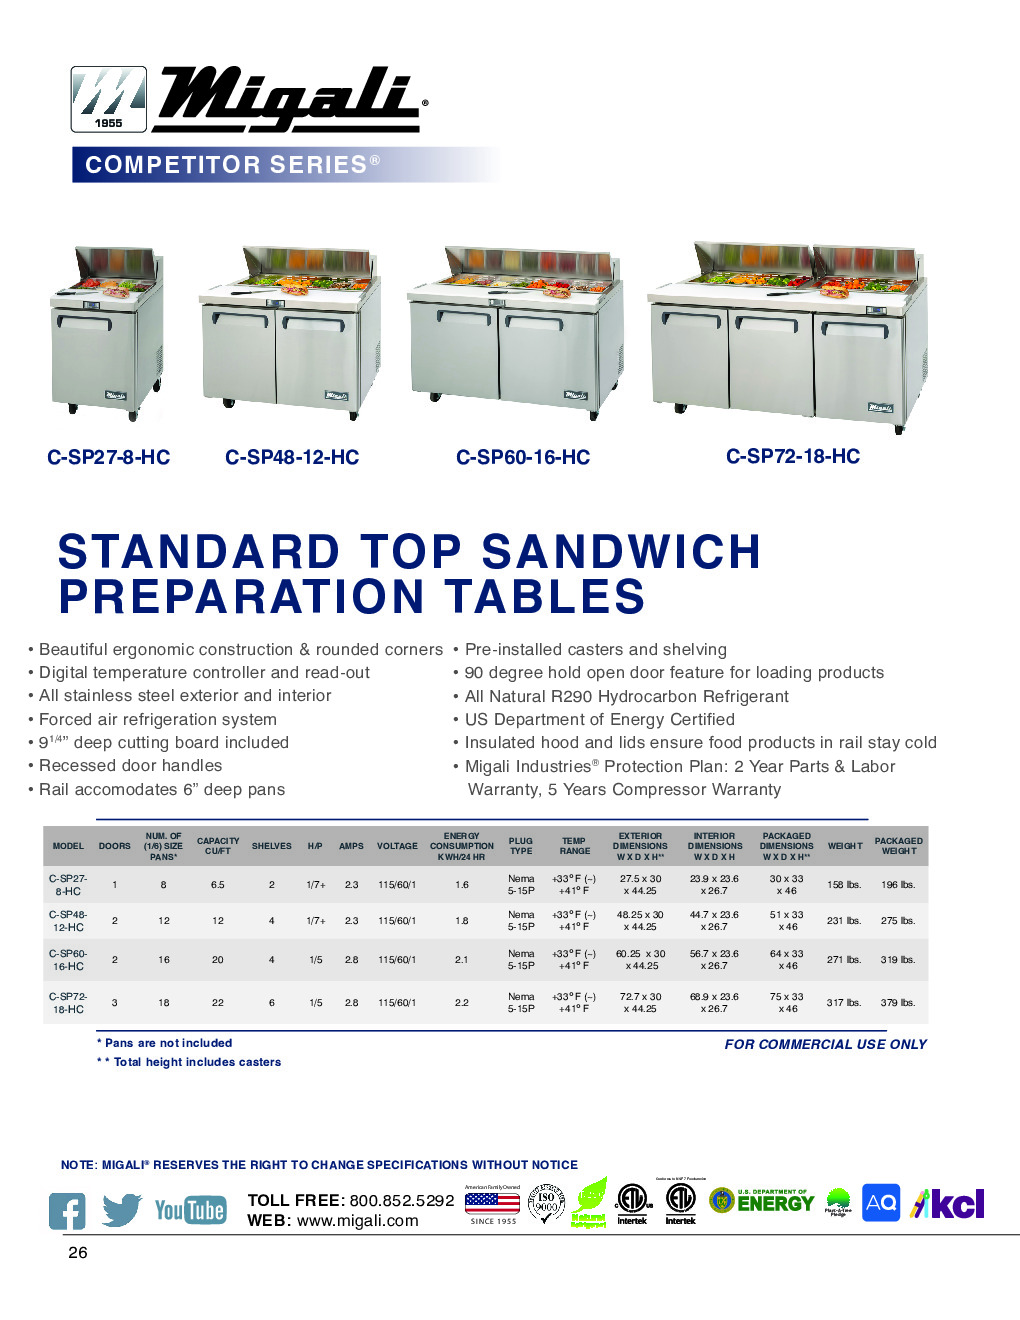 Migali C-SP36-10-HC Sandwich / Salad Unit Refrigerated Counter